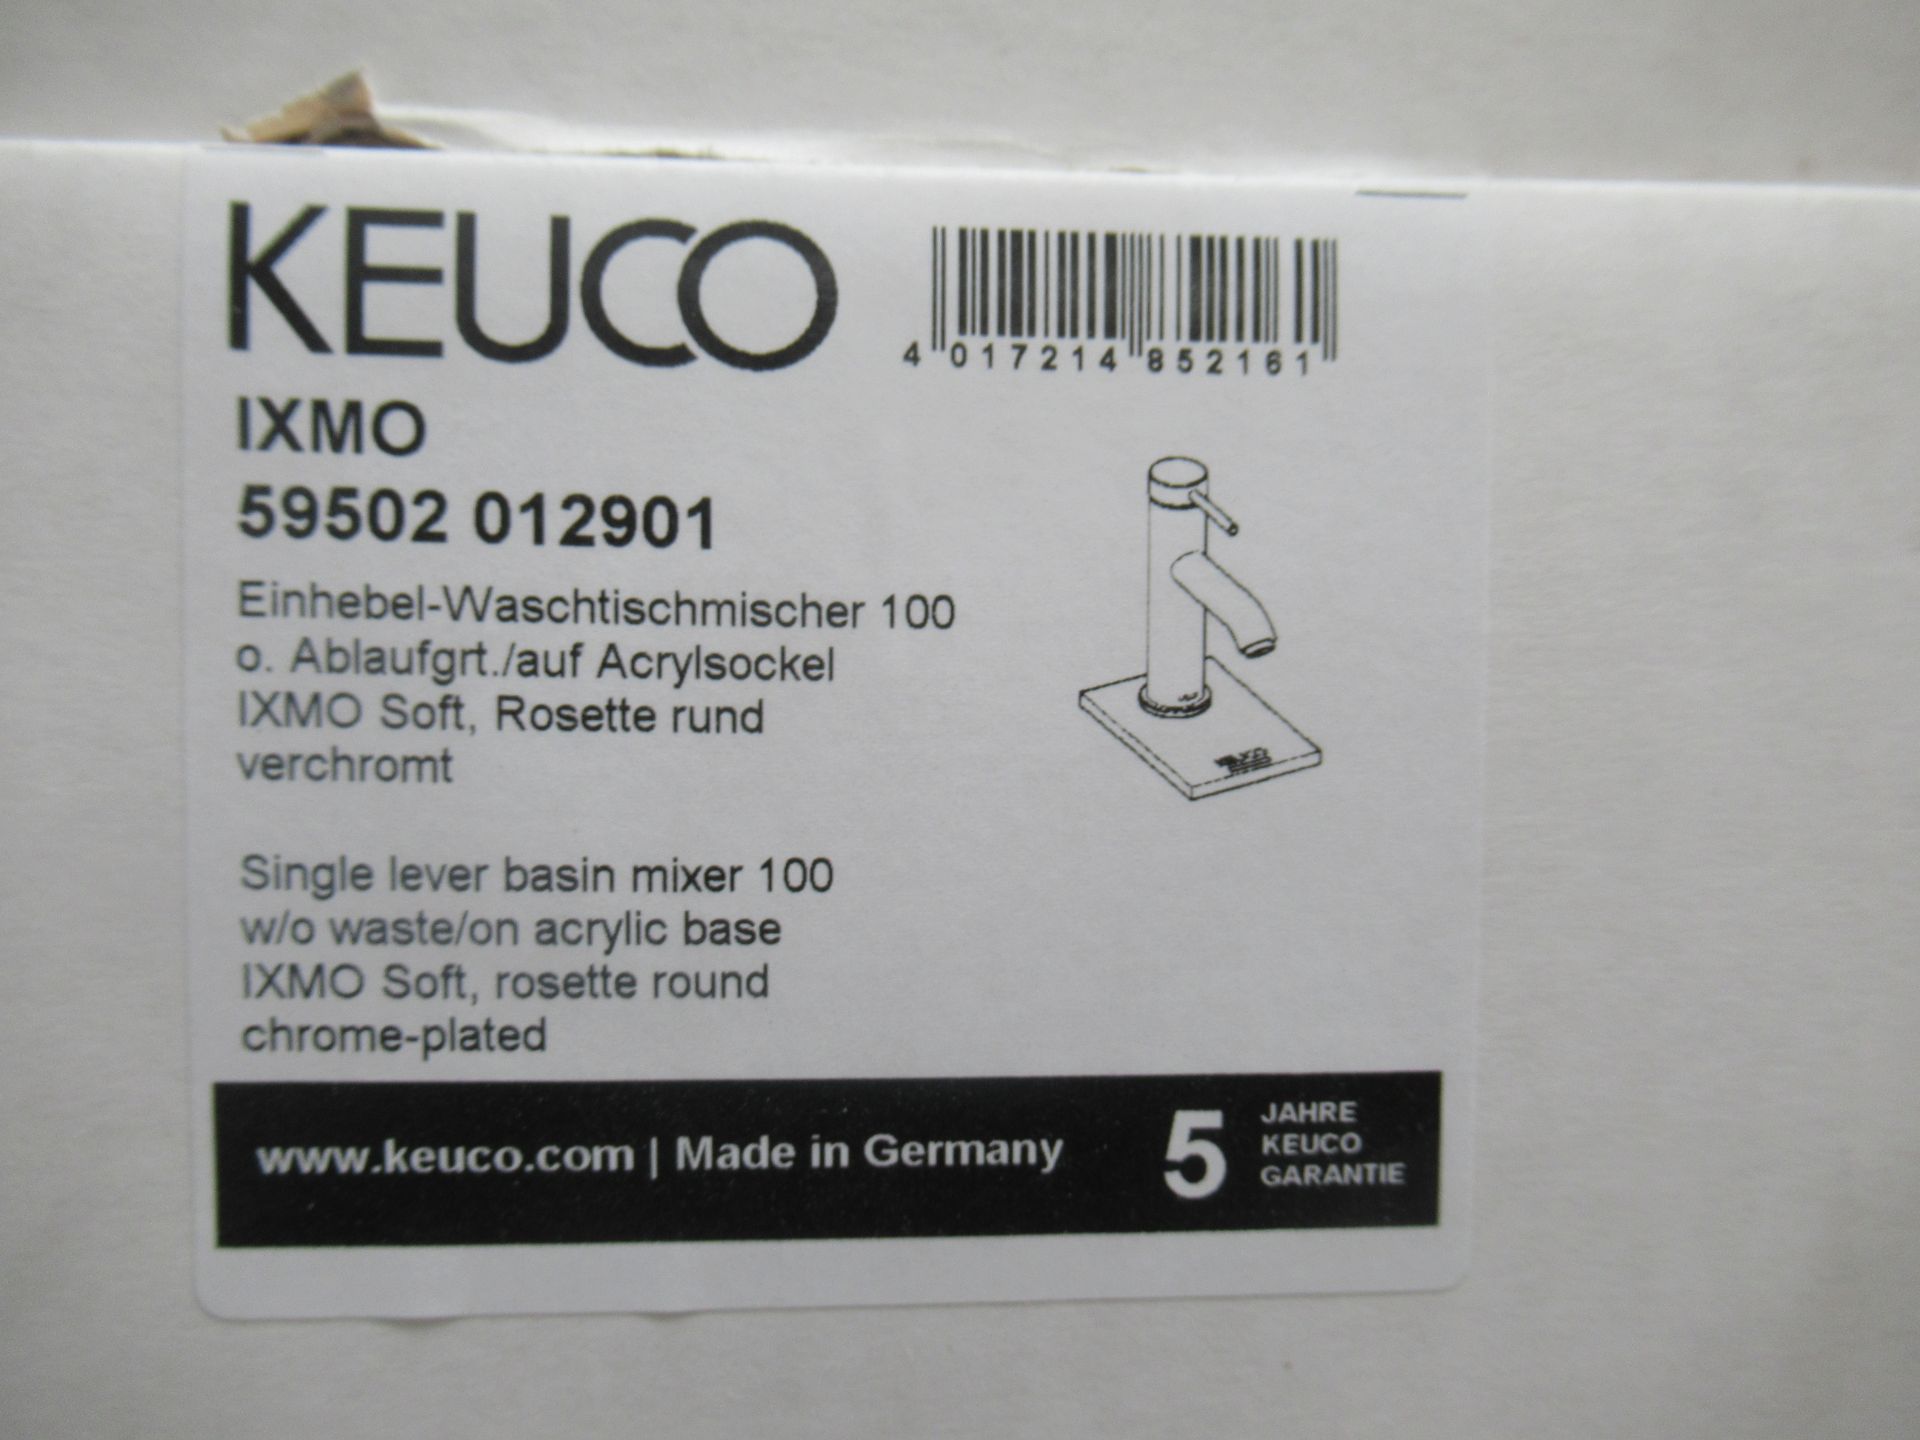 2 x Keuco IXMO Single Lever Basin Mixer 100-Tap, Chrome Plated, P/N 59502-012901 - Image 2 of 3